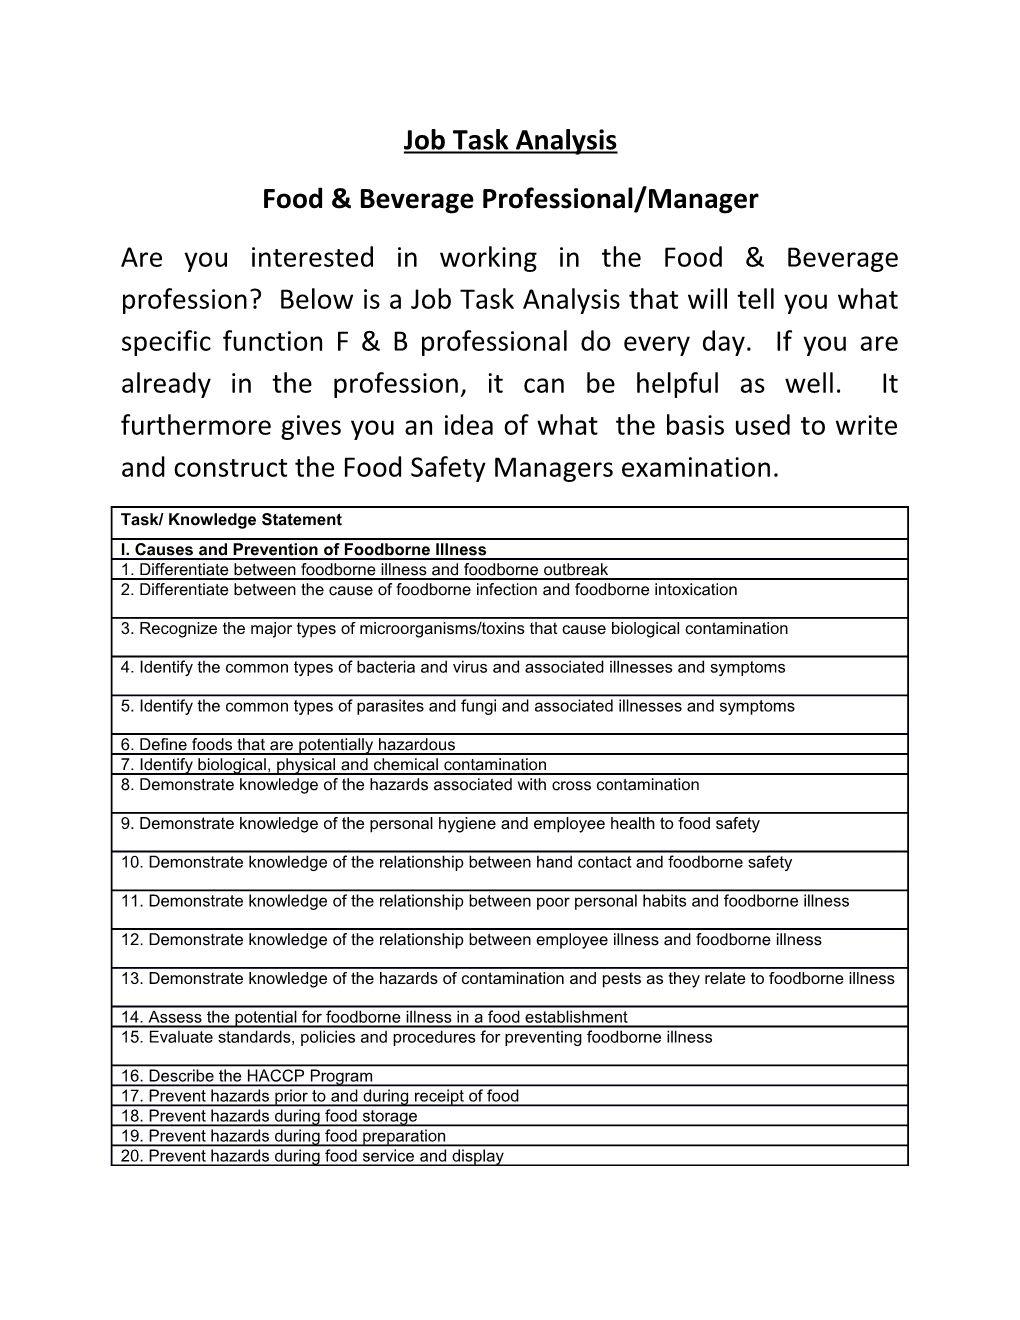 Food & Beverage Professional/Manager